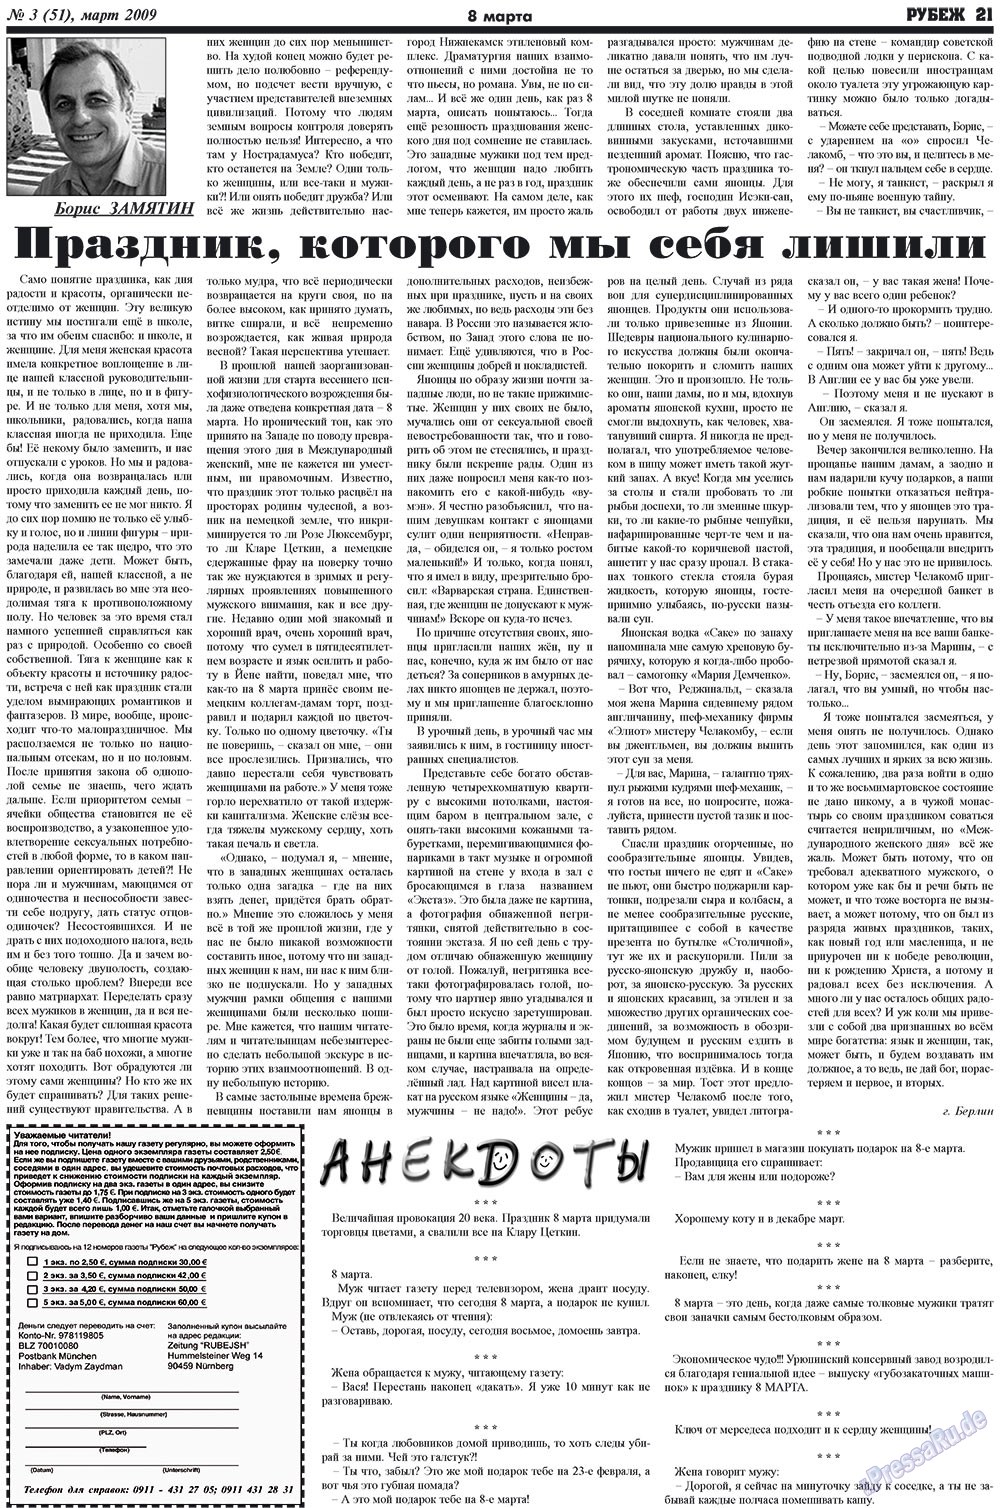 Рубеж, газета. 2009 №3 стр.21